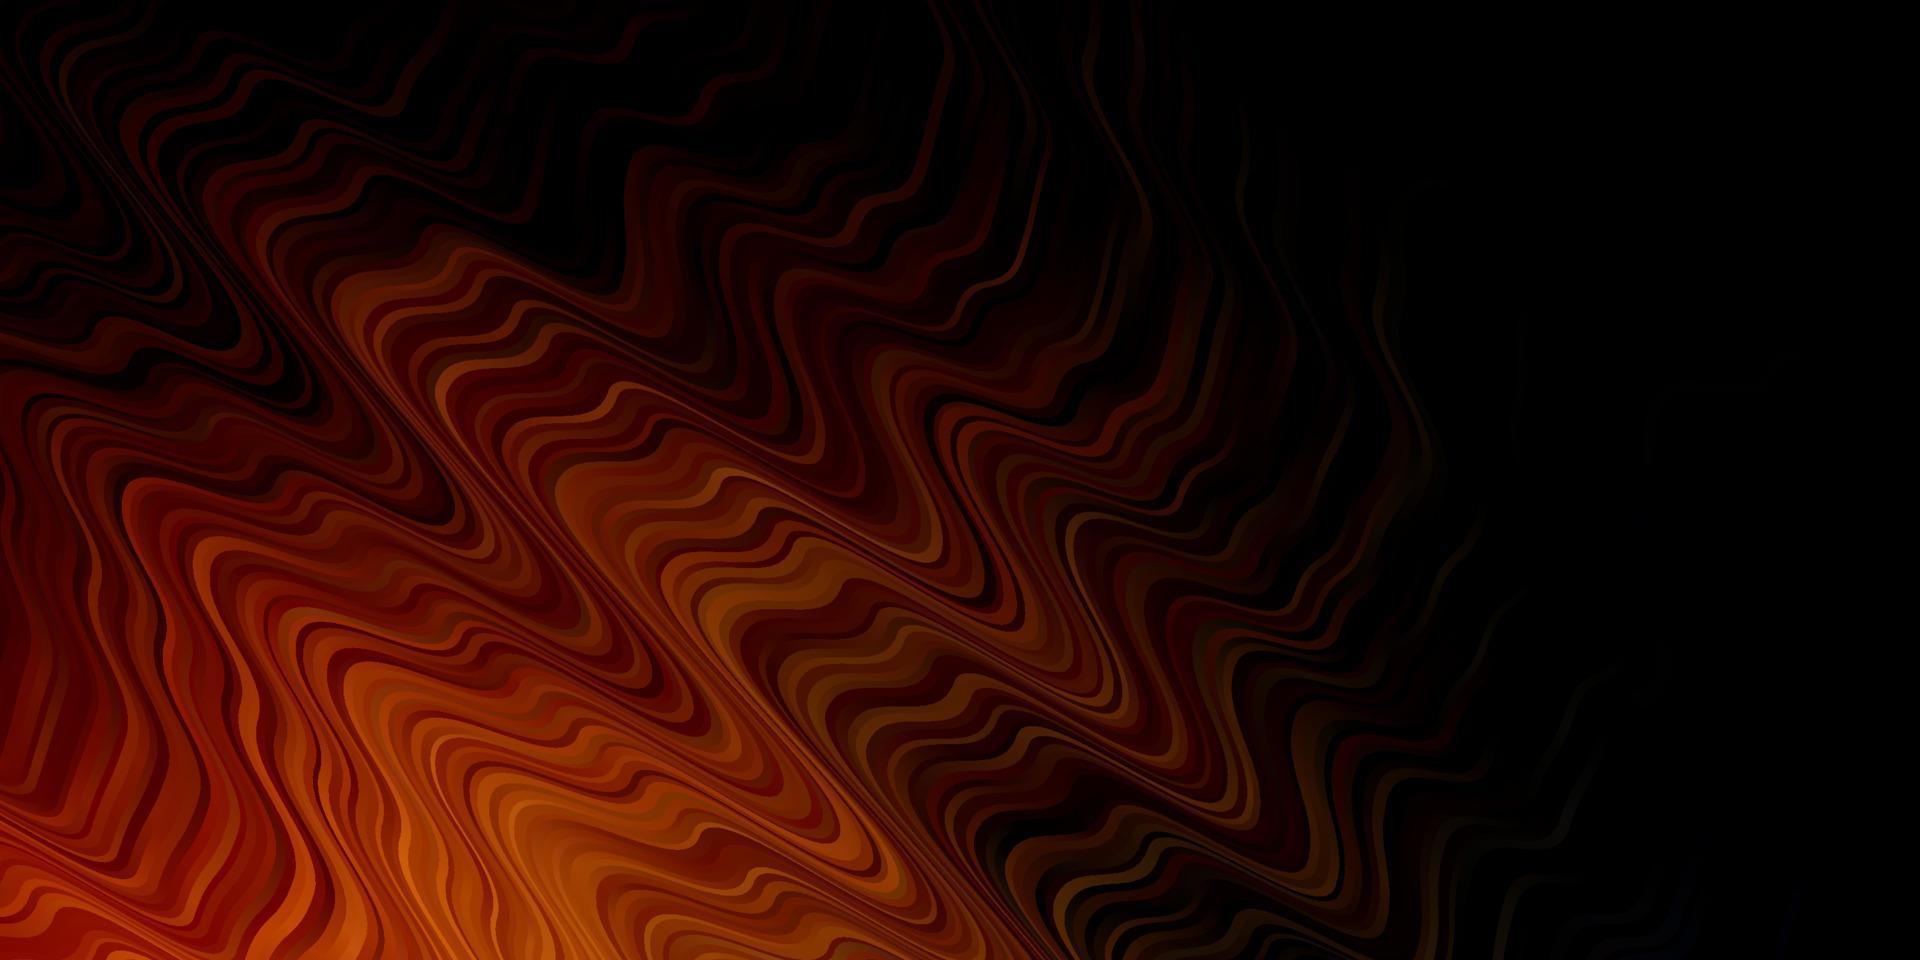 Dark Orange vector background with lines.